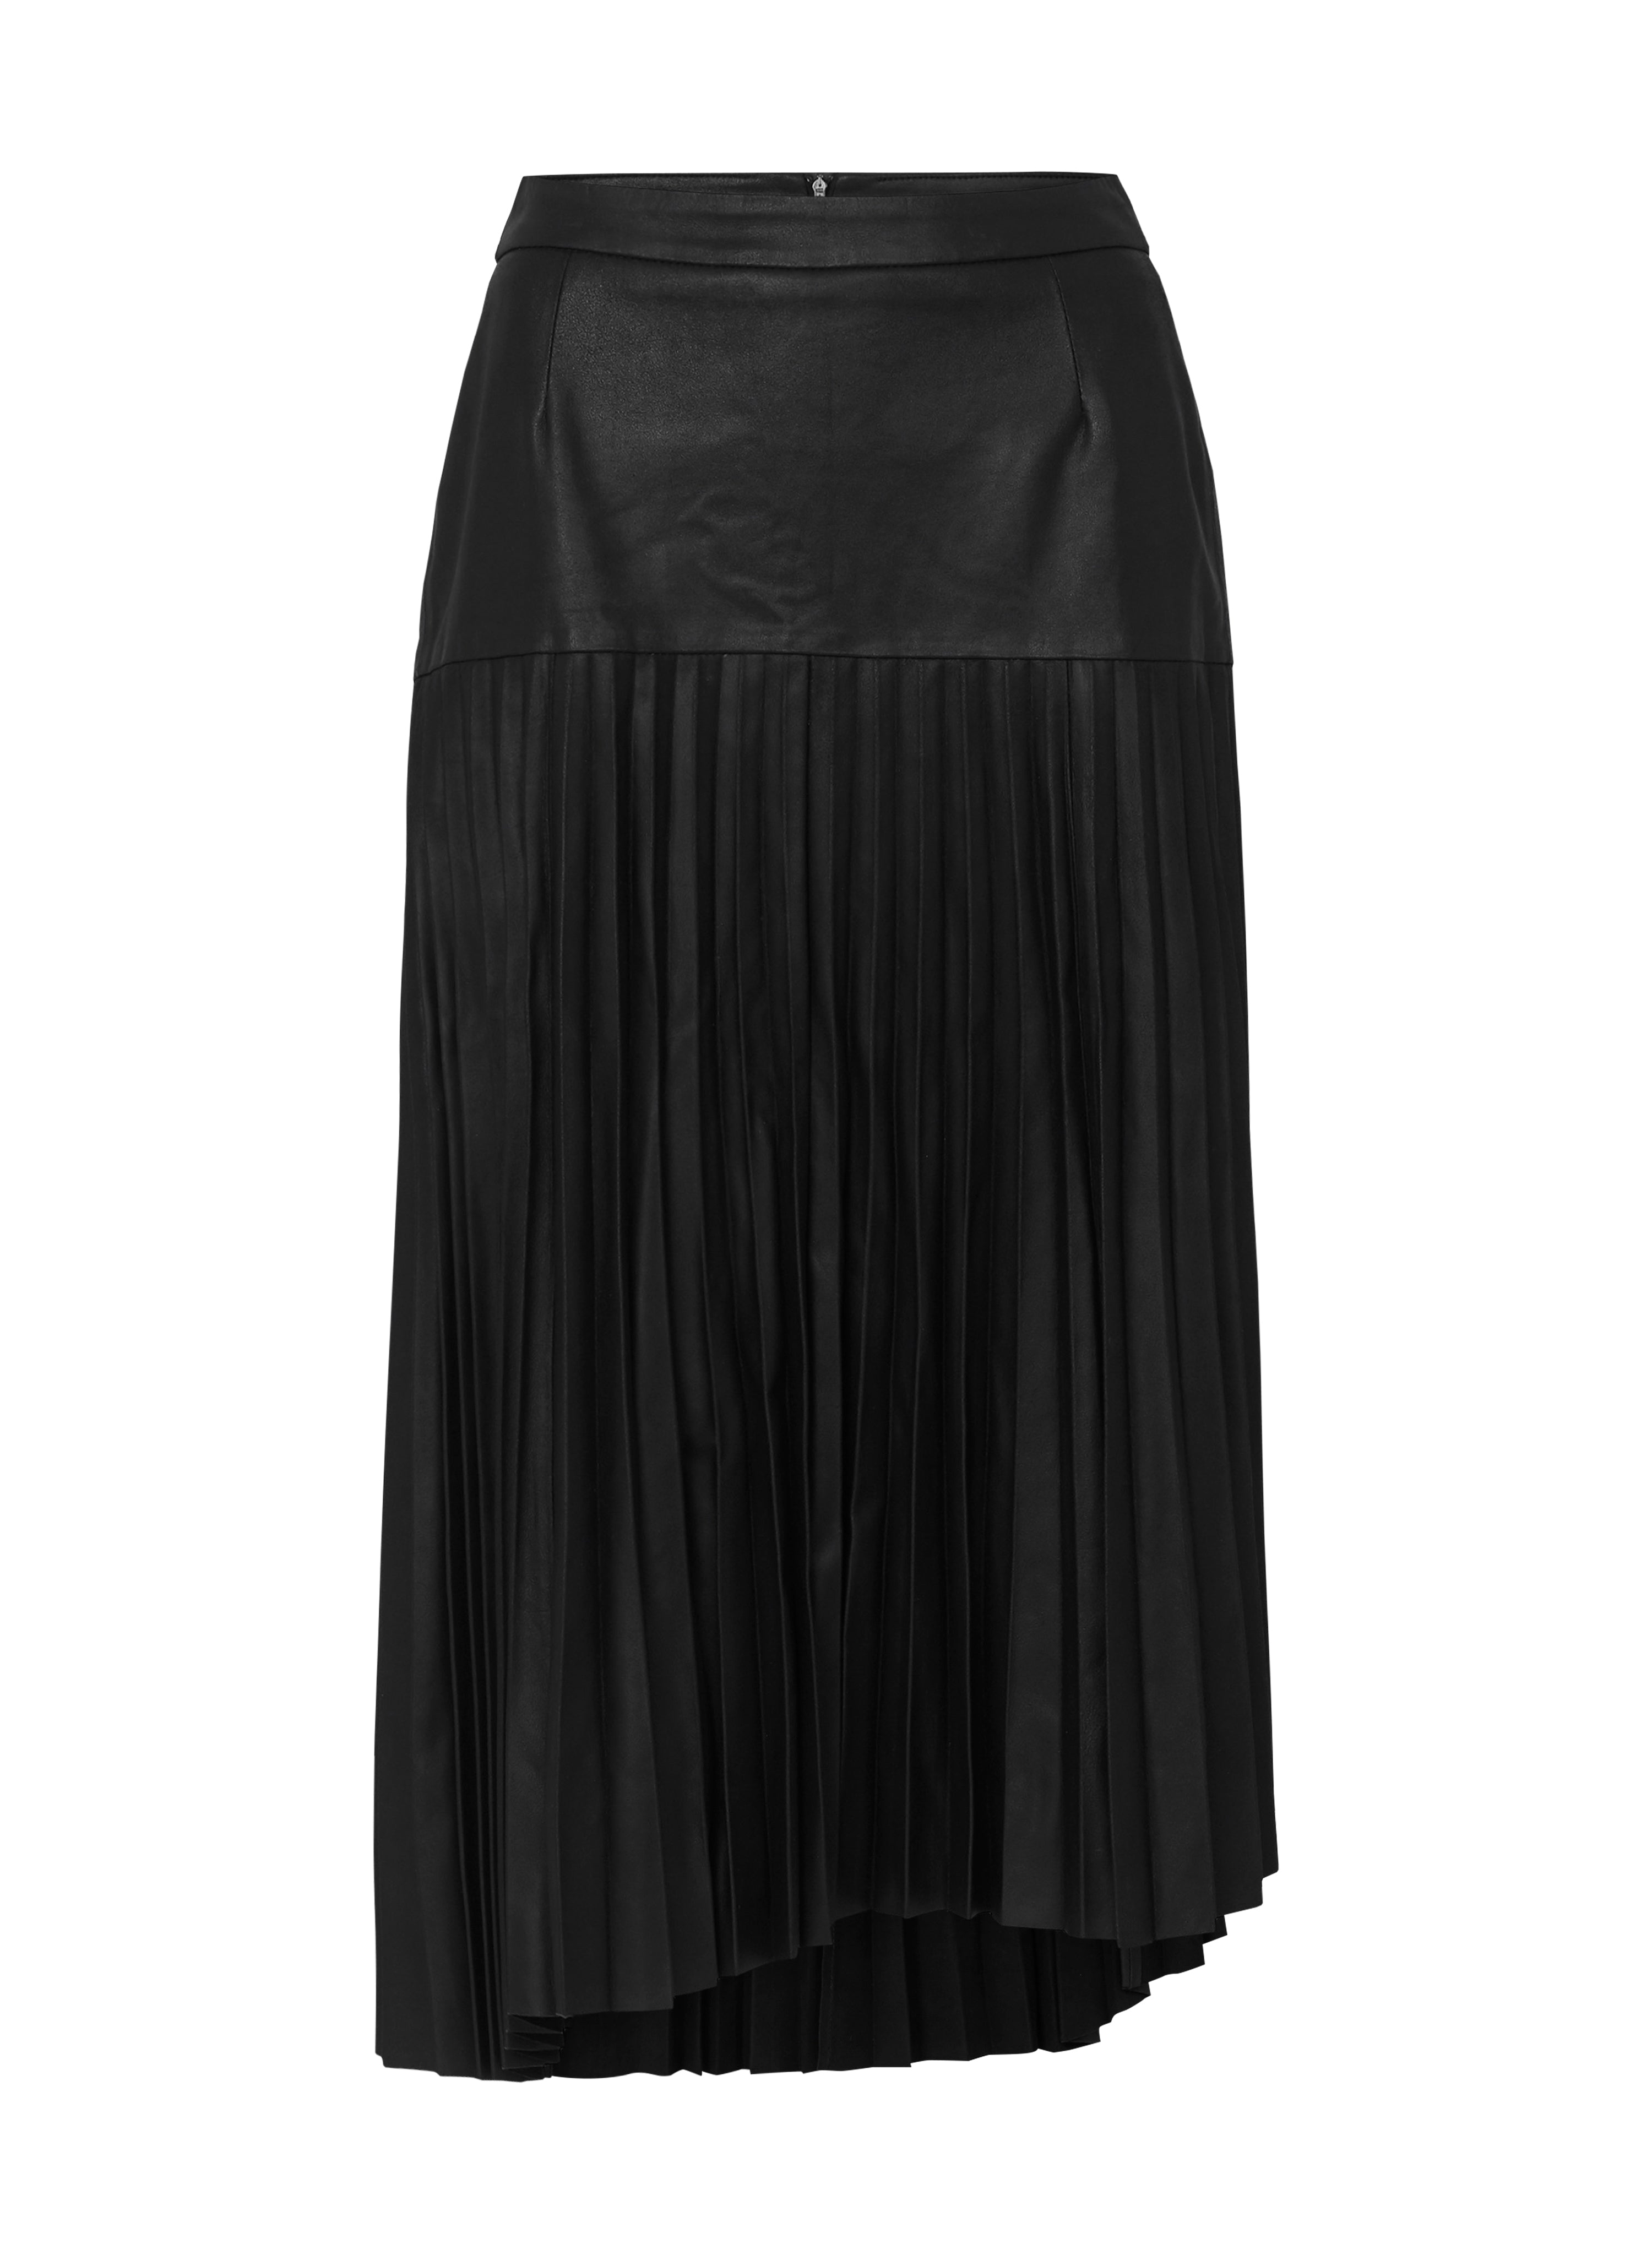 aliexpress 38 skirt available on aliexpresscom  Leather skirt outfit  Black skirt long Long skirt casual